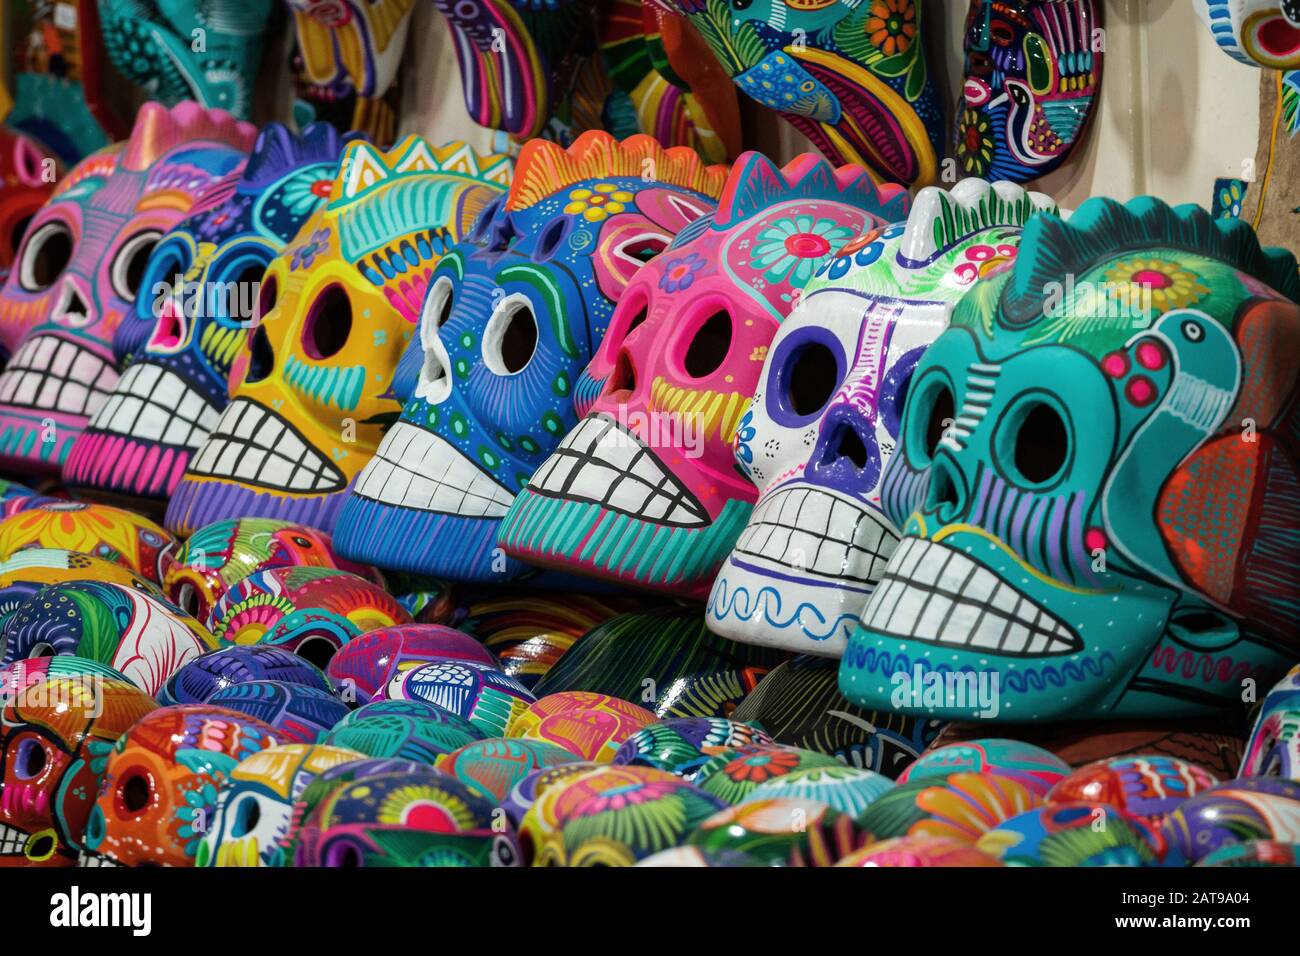 Dekorierte bunte Schädel auf dem Straßenmarkt in San Miguel de Allende, Mexiko, Tag der Toten (Dia de los Muertos) Konzept. Stockfoto